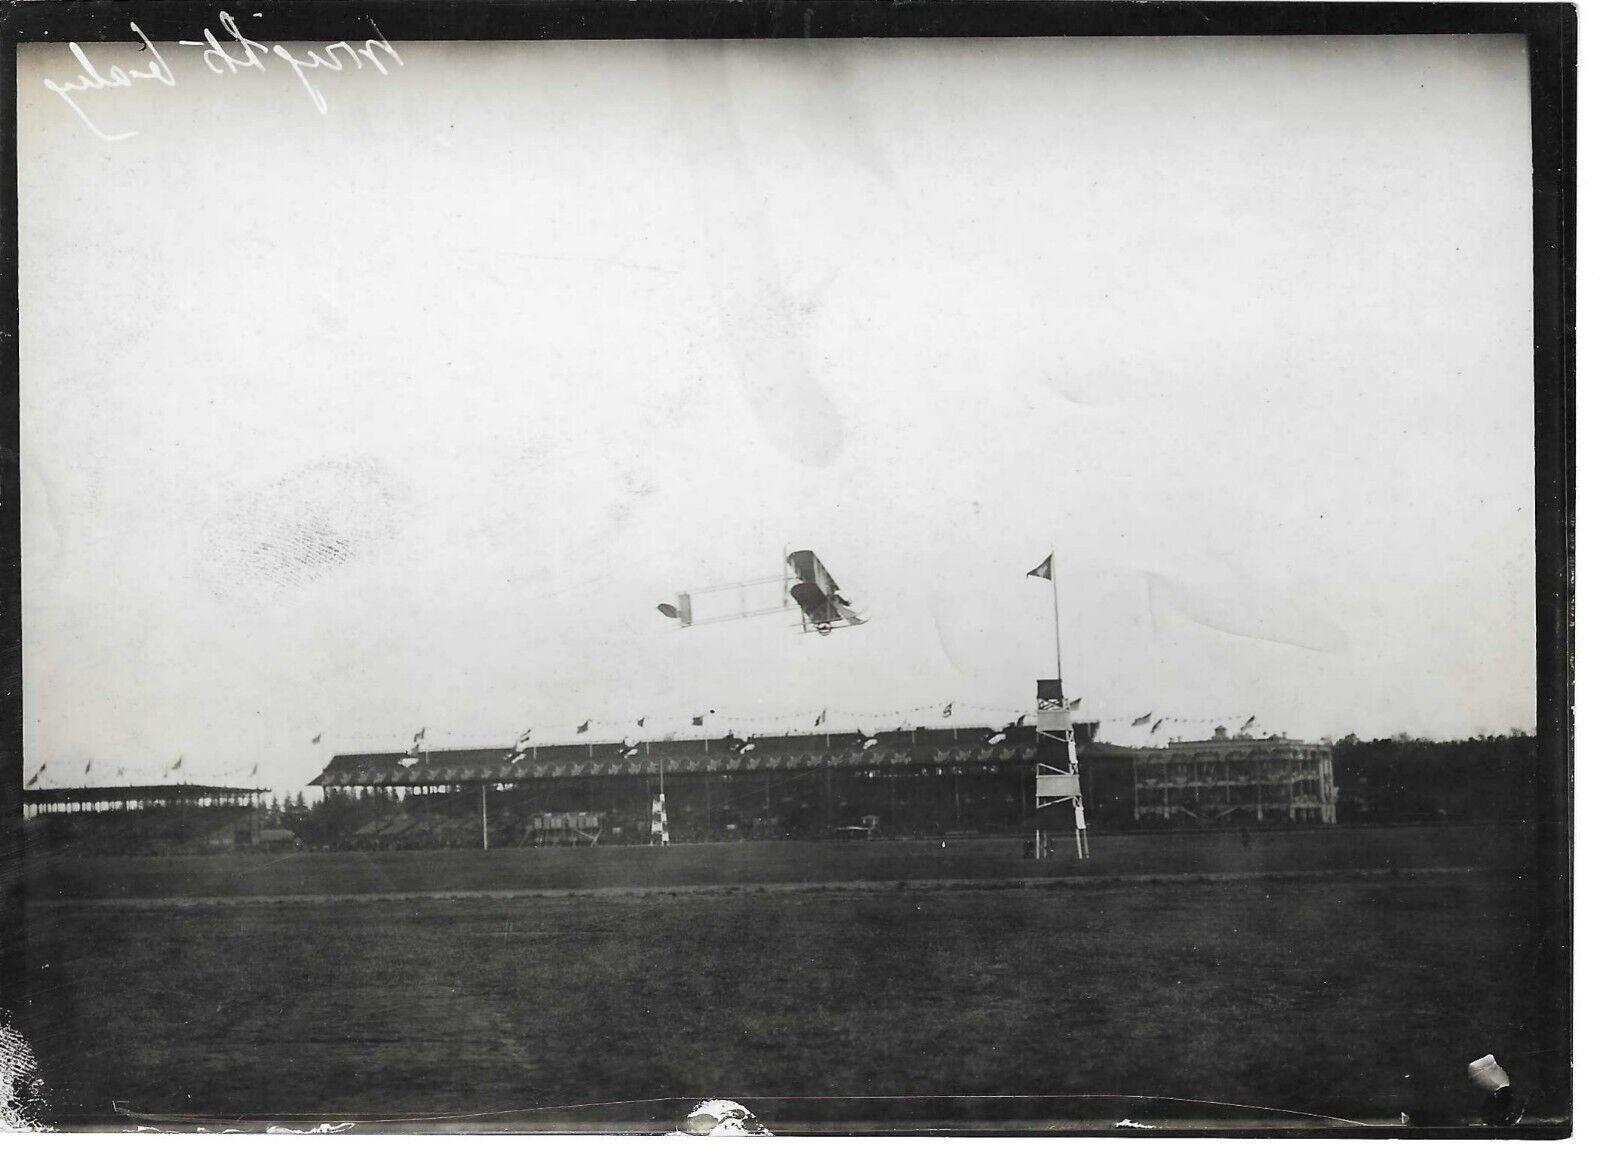 1910 Belmont Park Intl Aviation Meet PHOTO Baby Wright Bros Model R in flight